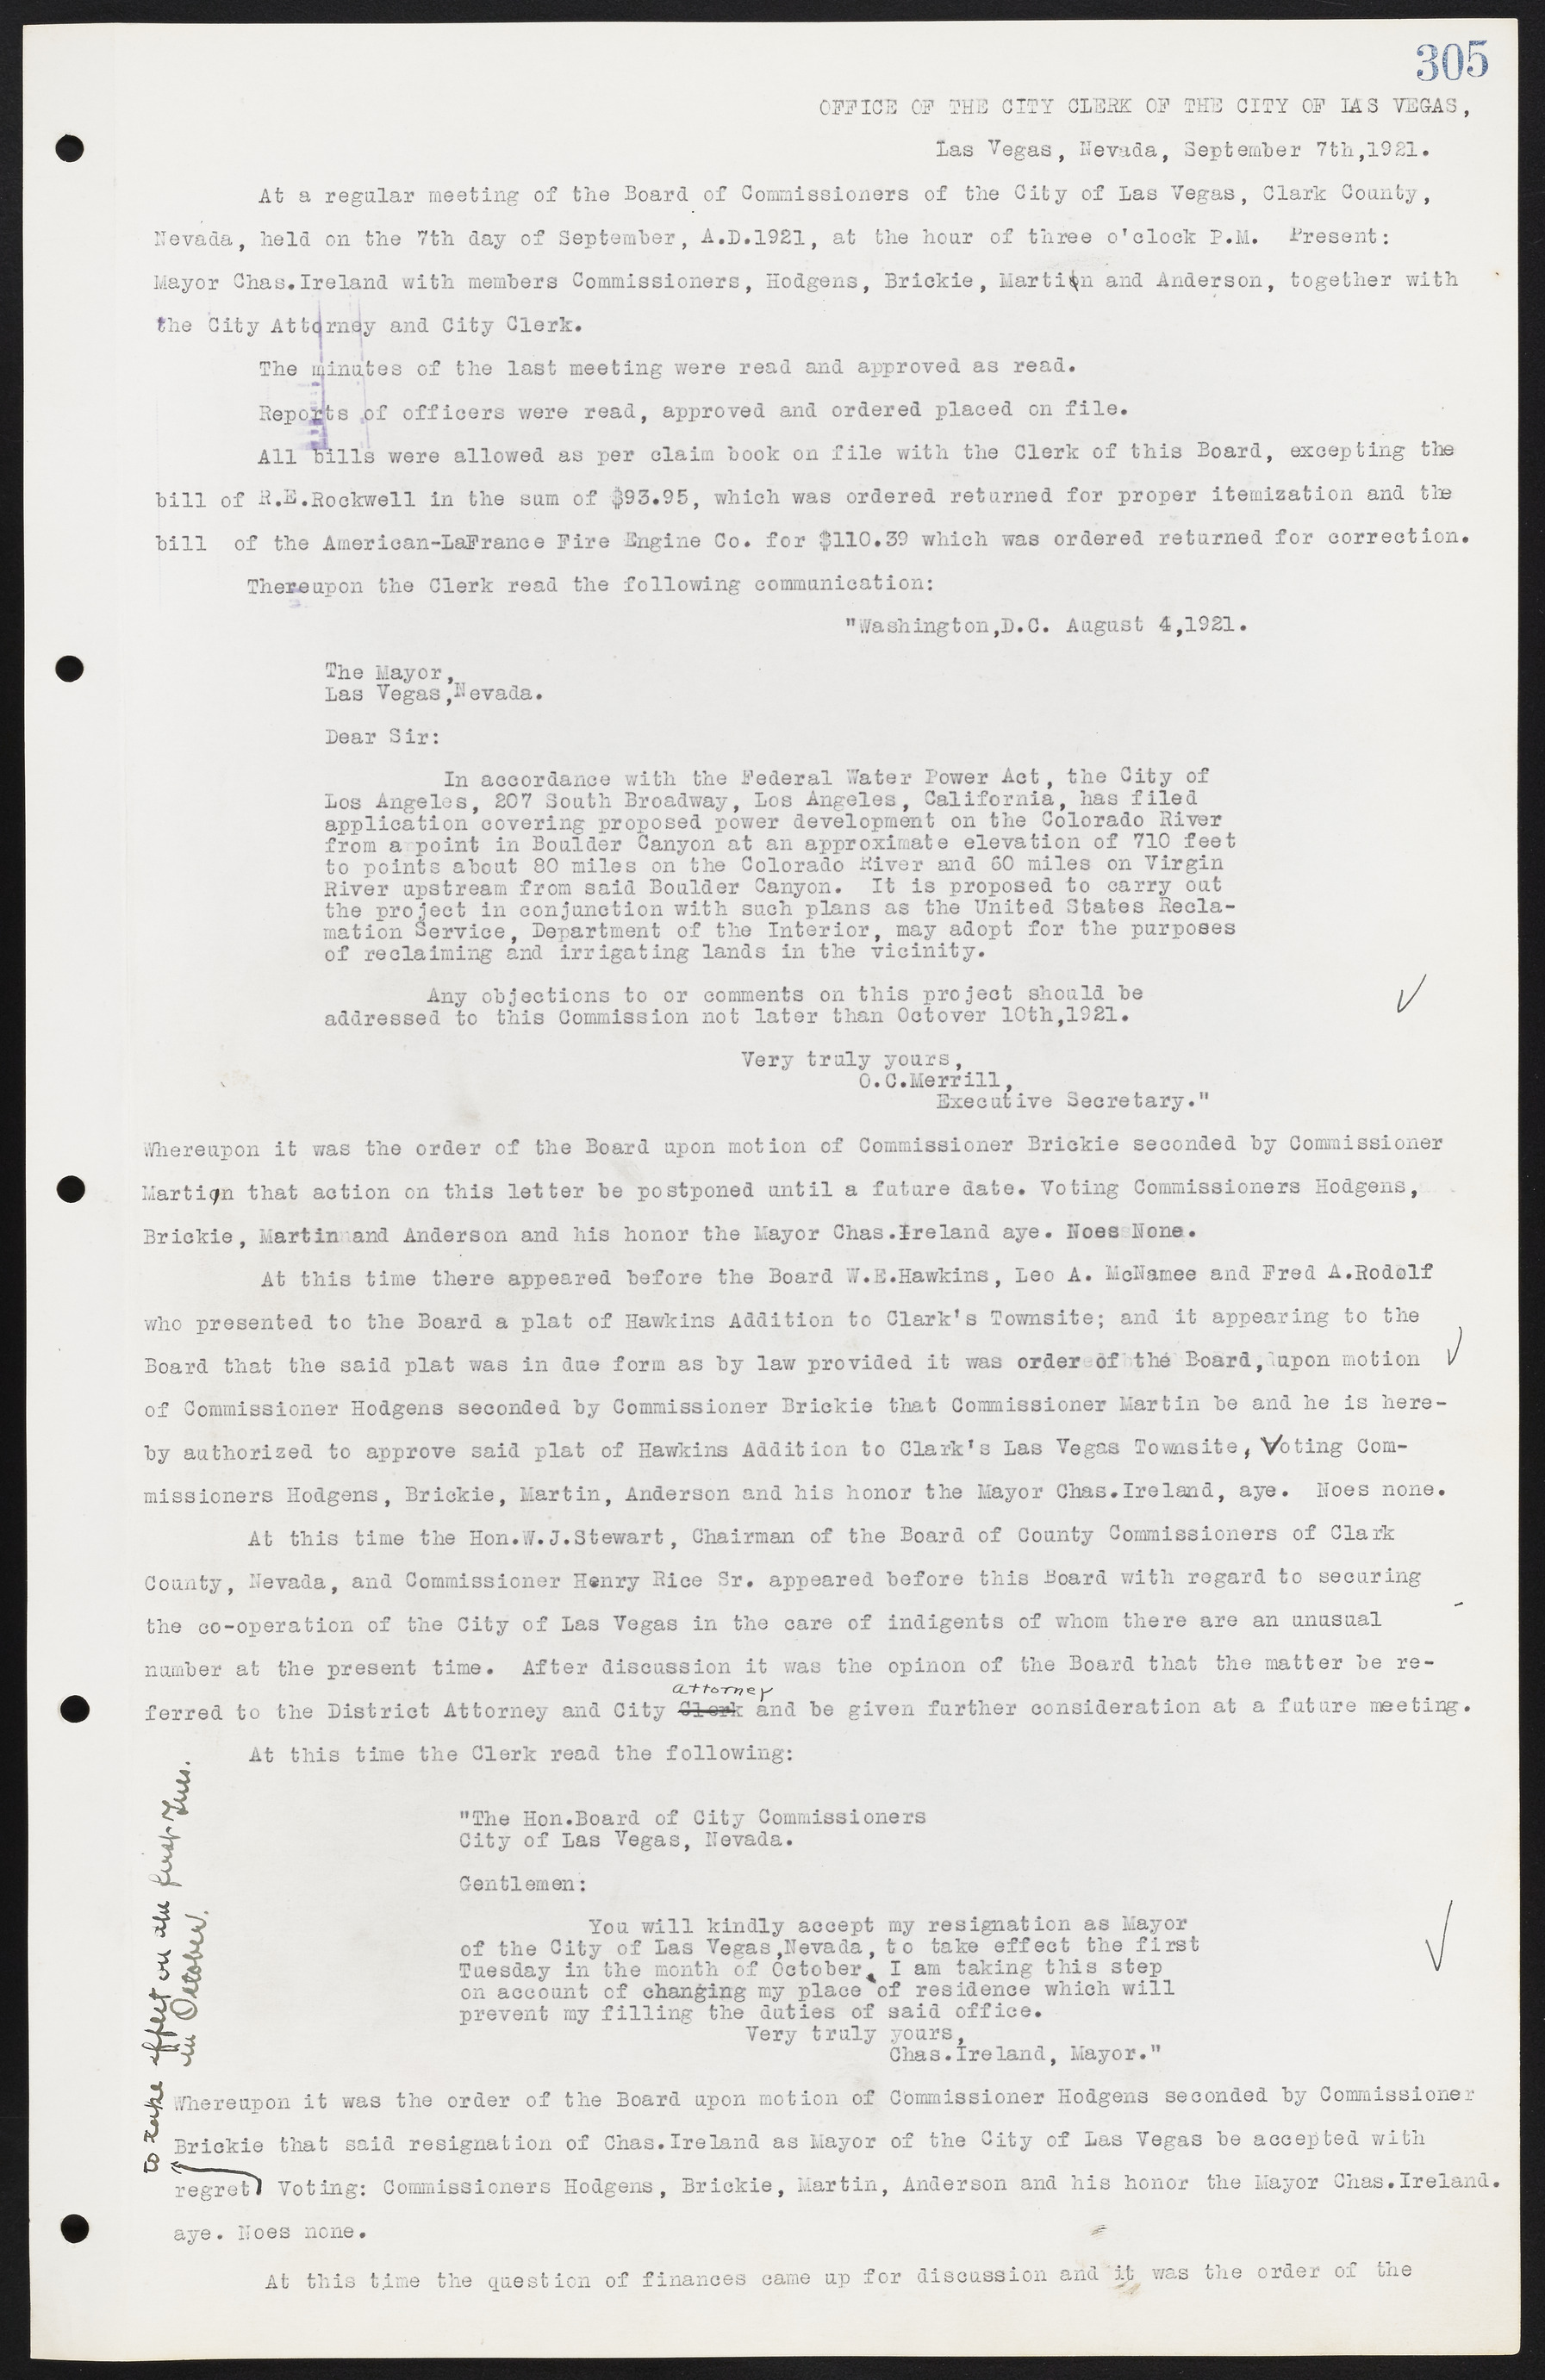 Las Vegas City Commission Minutes, June 22, 1911 to February 7, 1922, lvc000001-321